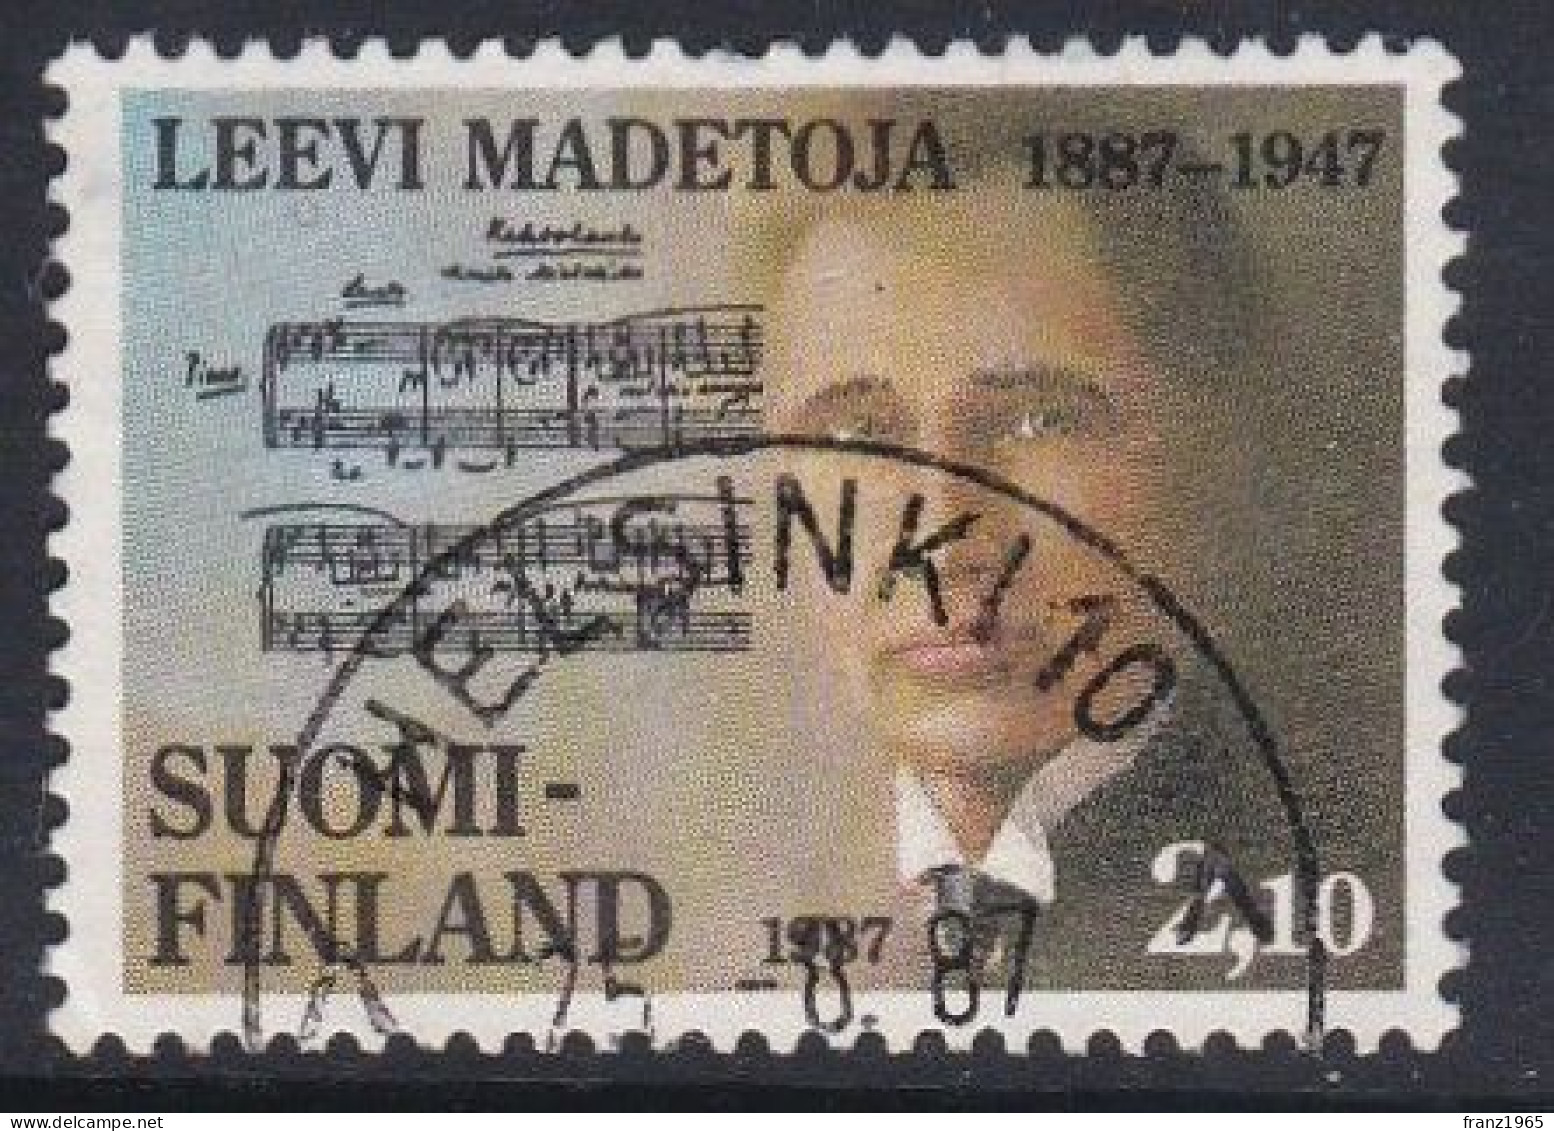 100th Birthday Of Leevi Madetoja - 1987 - Used Stamps